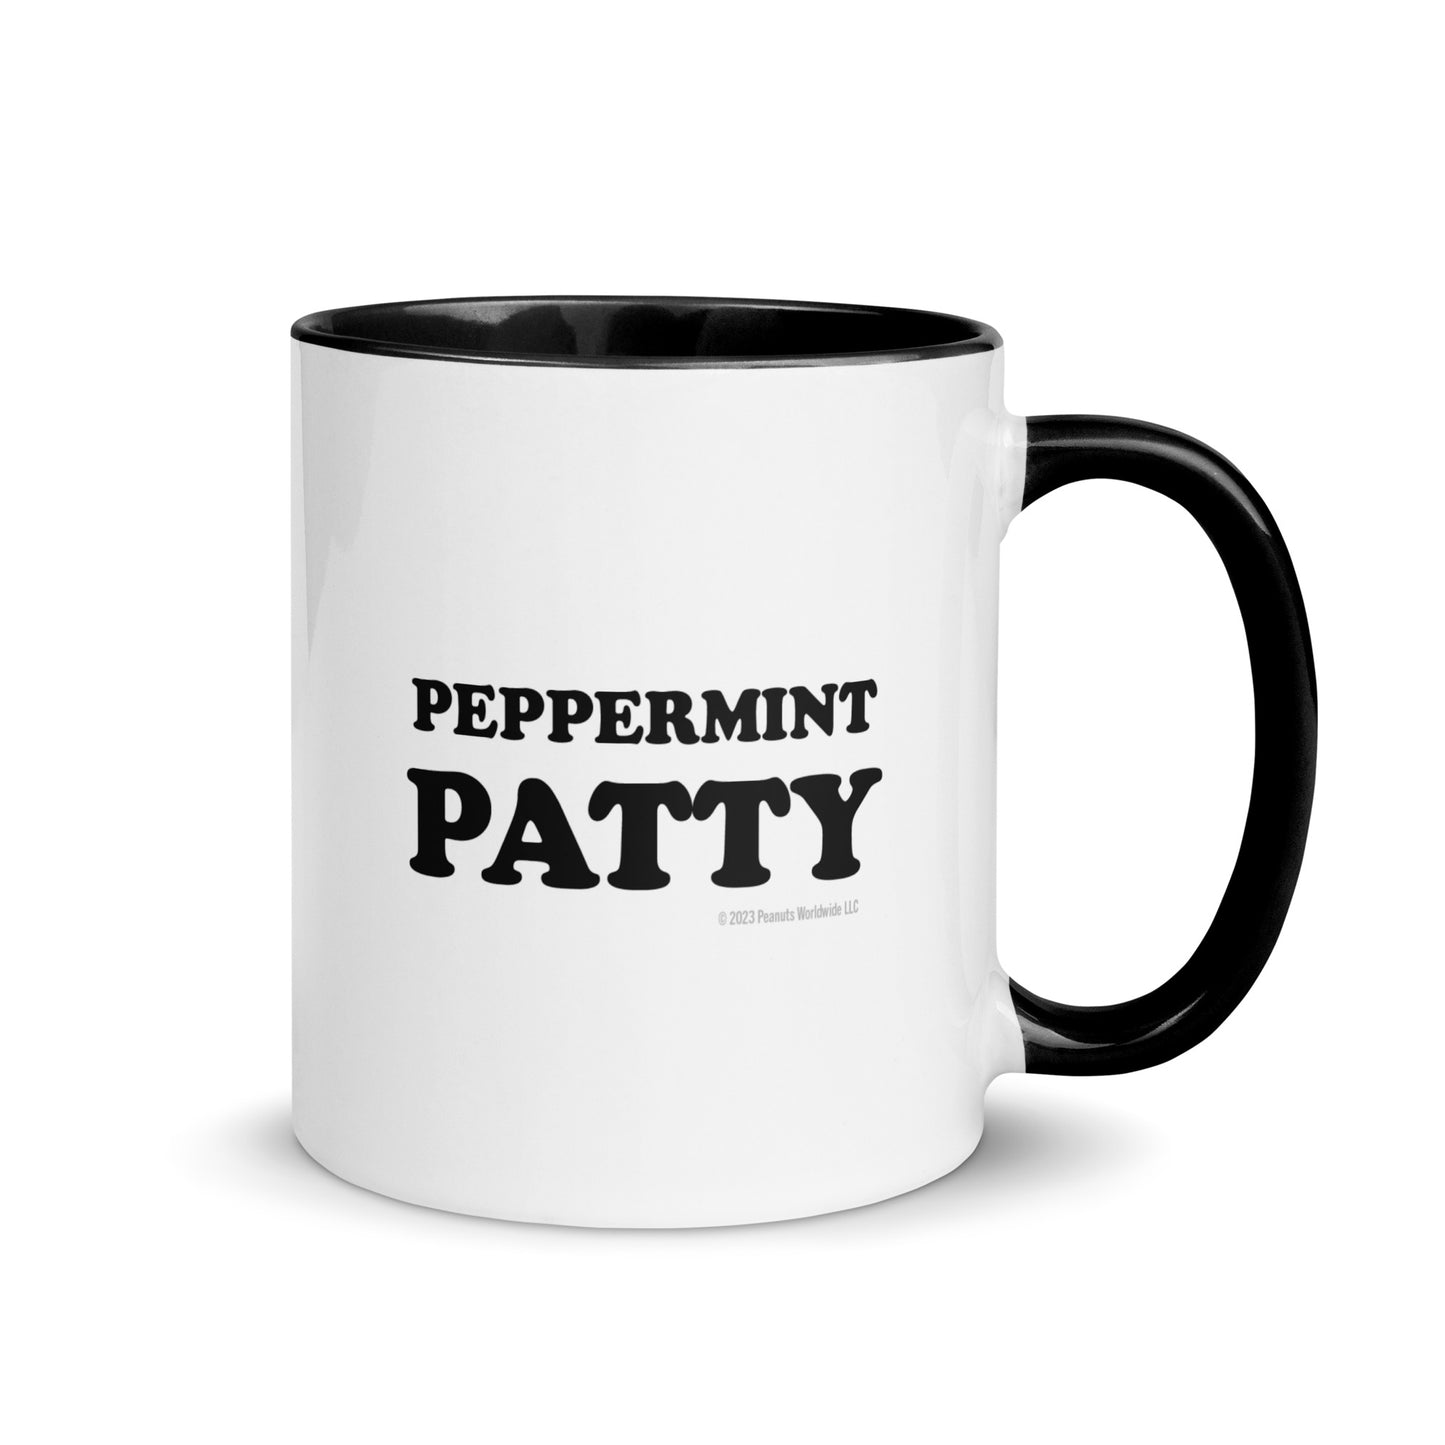 Peppermint Patty Two-Tone Mug